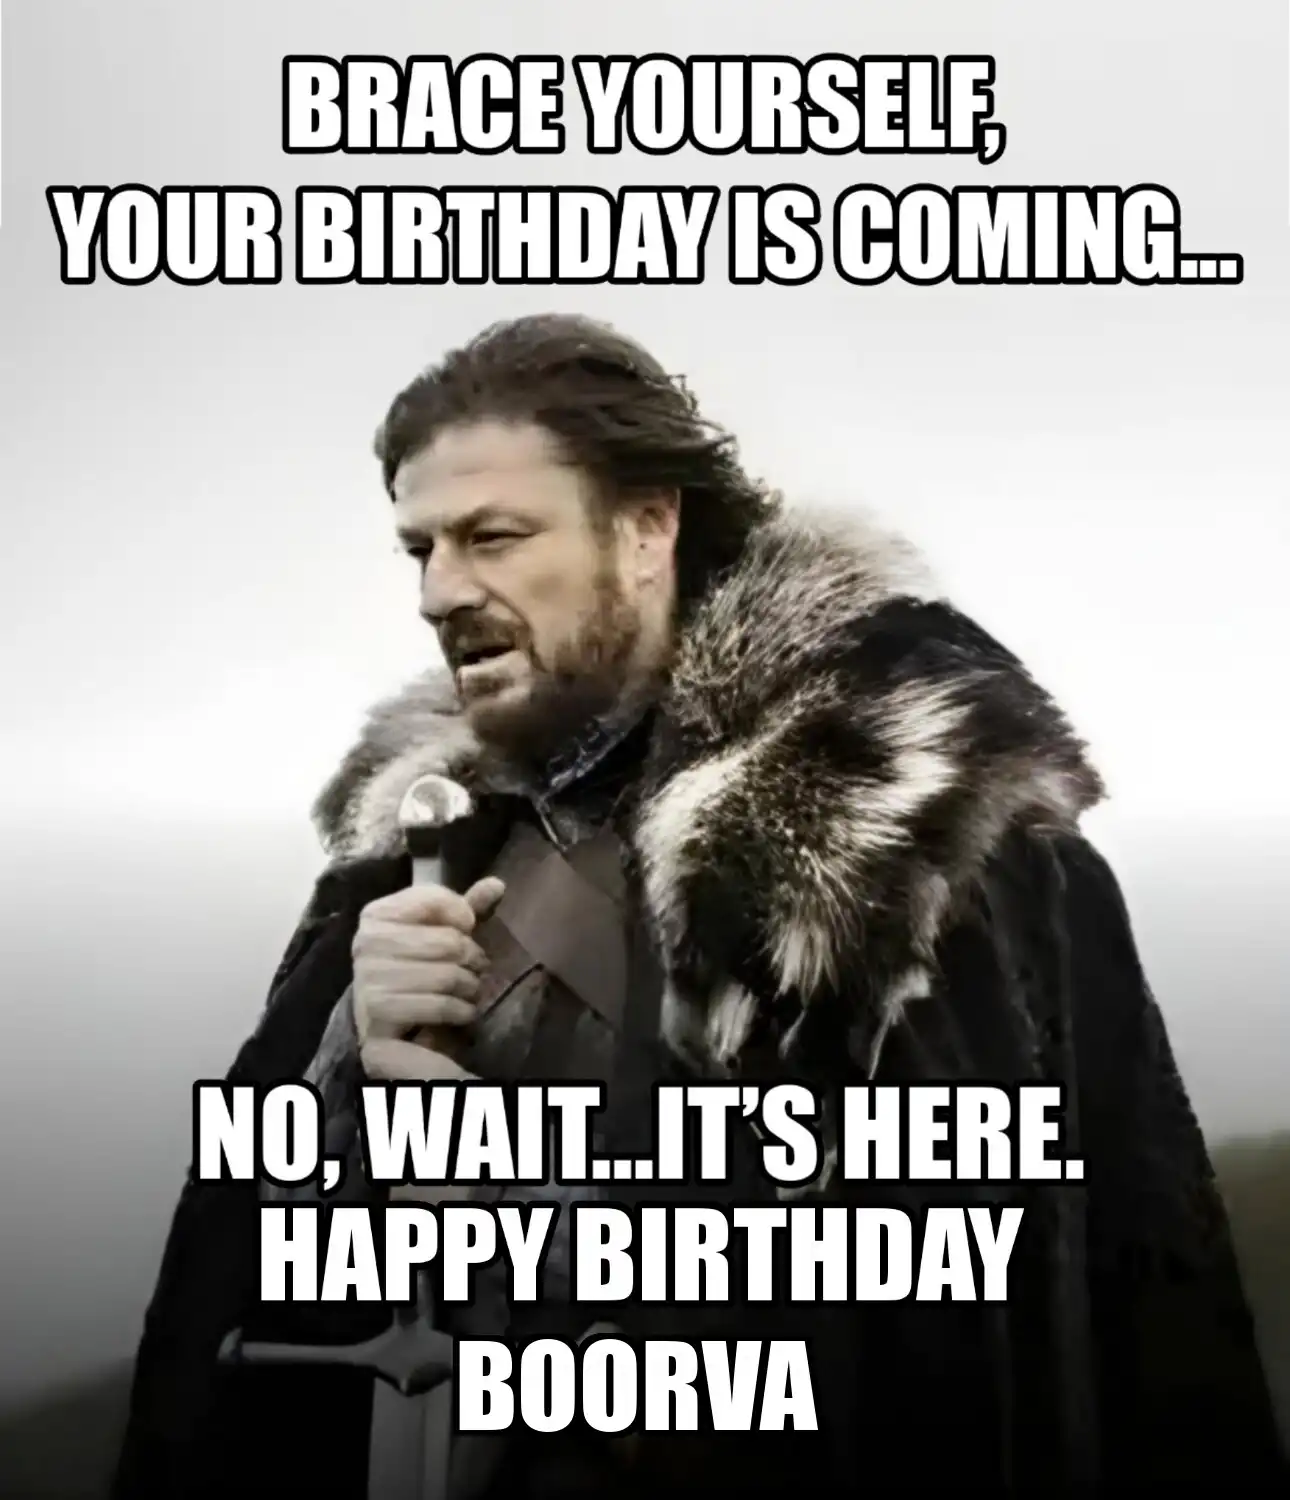 Happy Birthday Boorva Brace Yourself Your Birthday Is Coming Meme